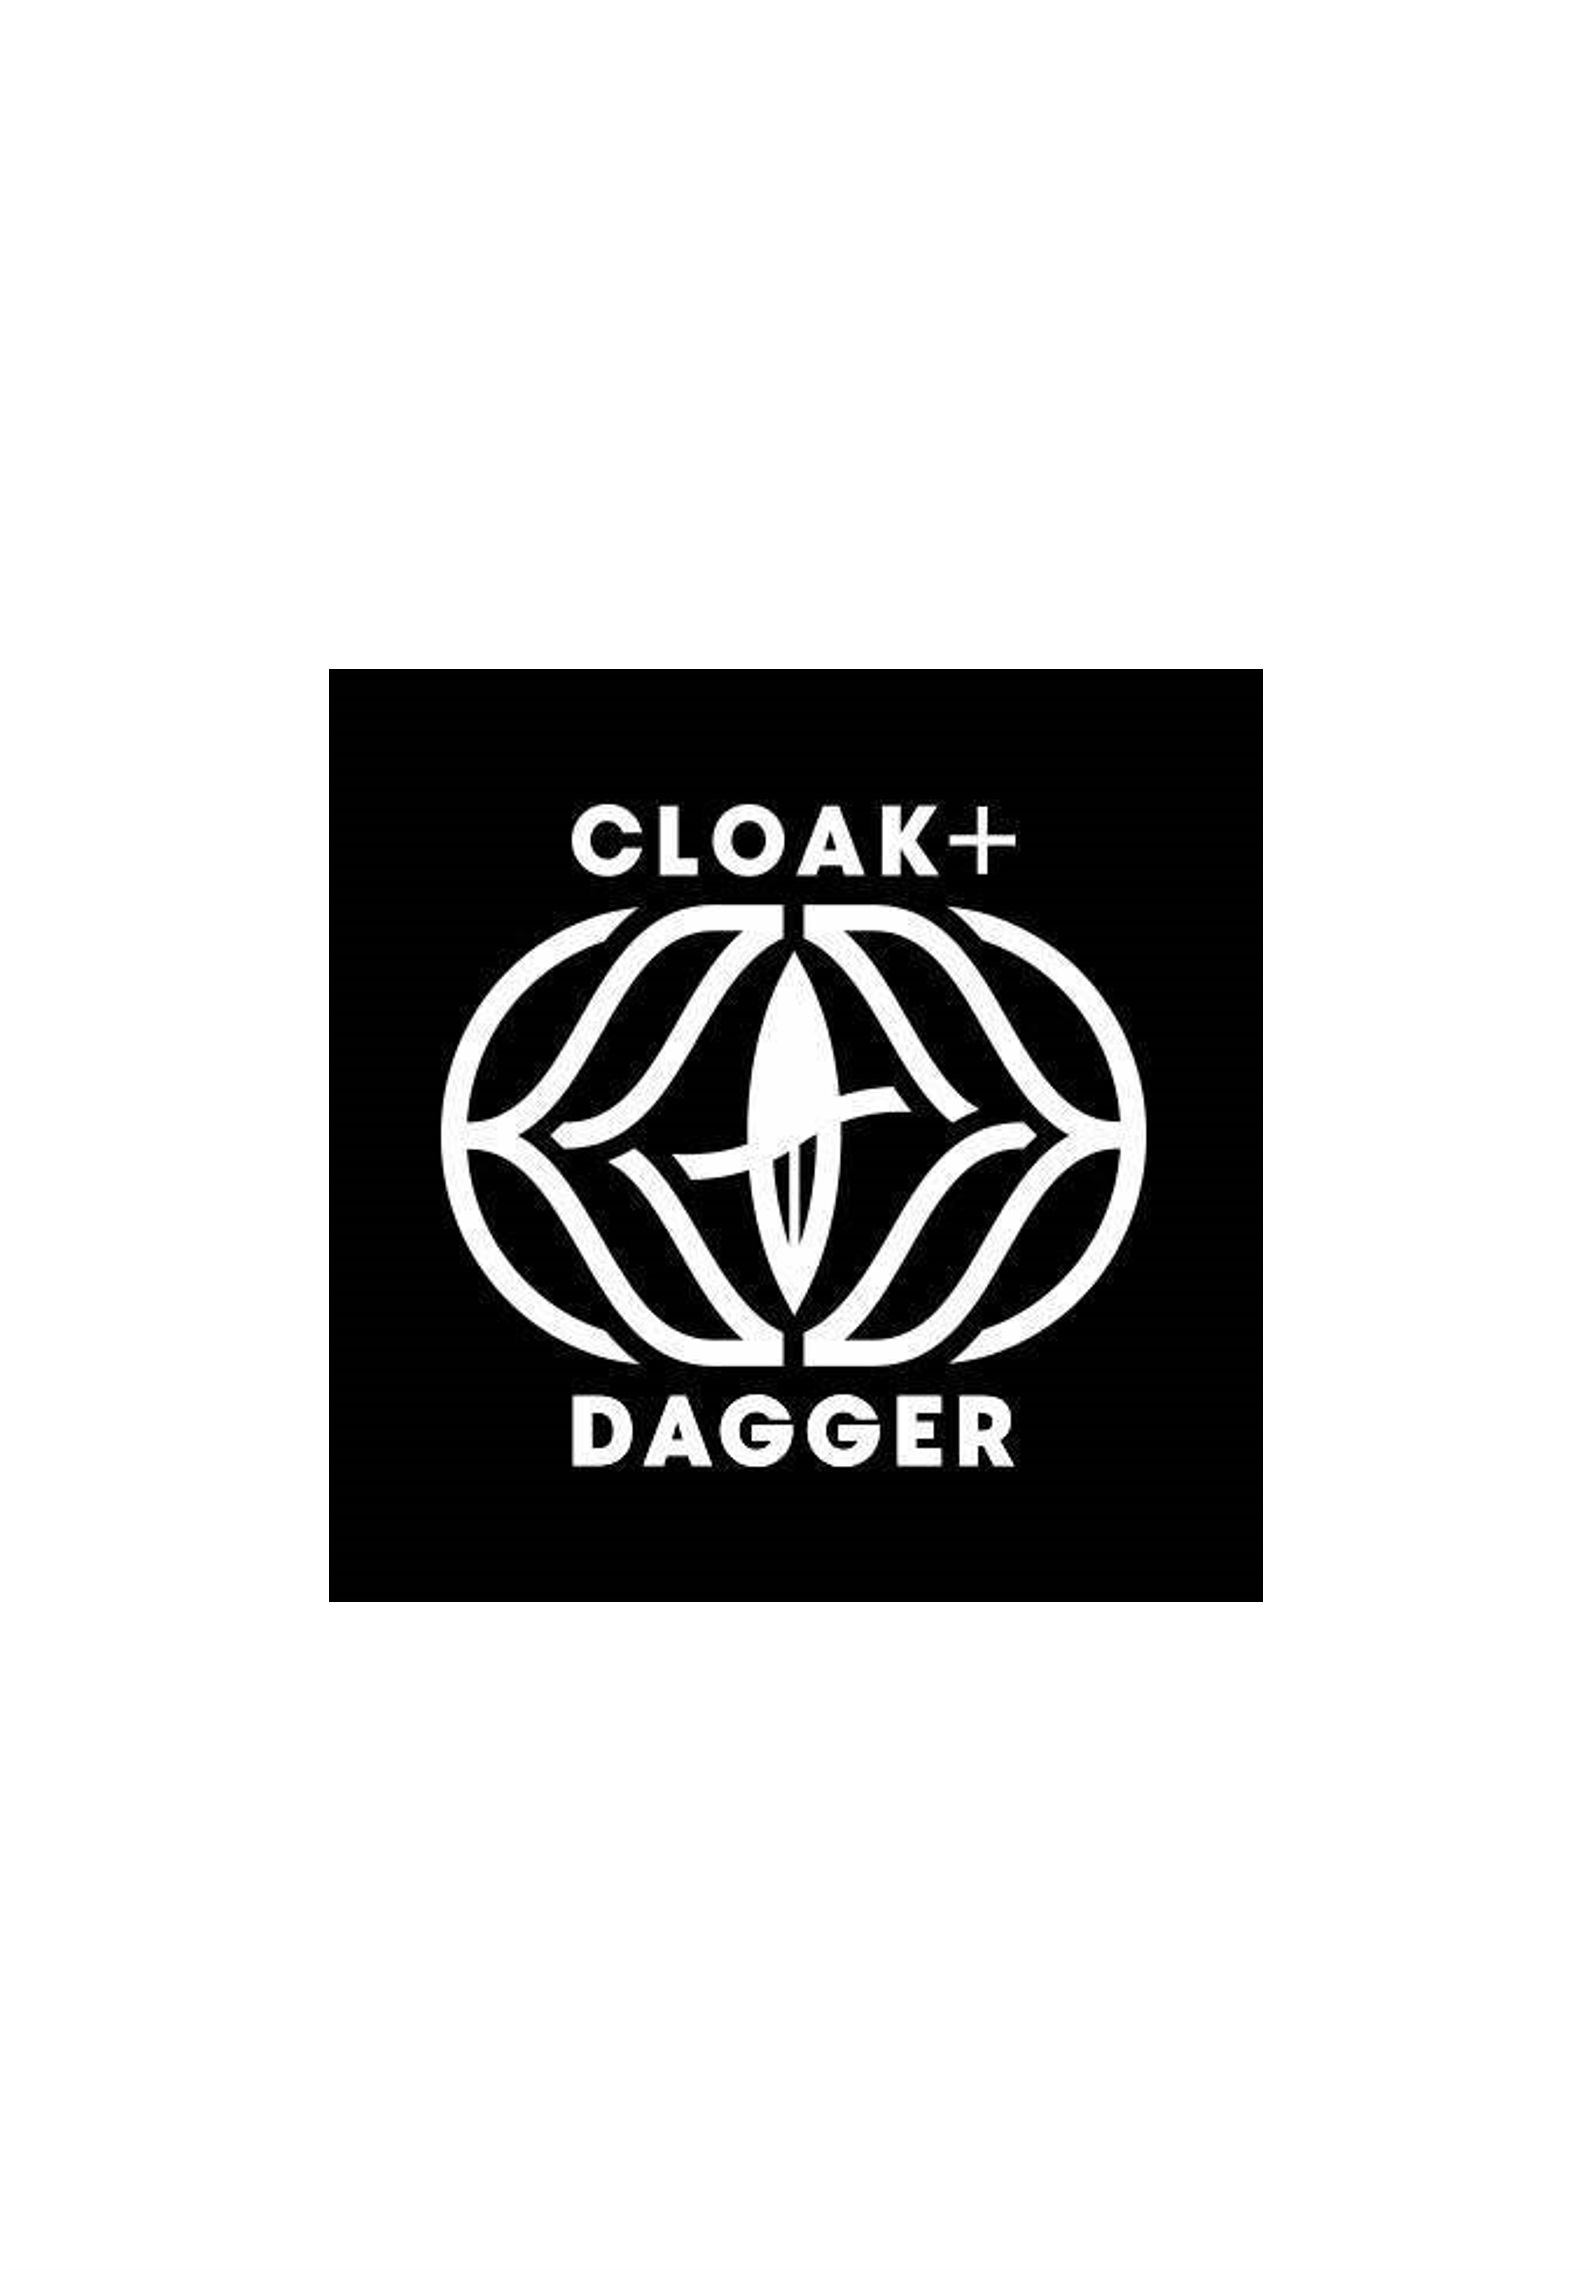 Cloaks + Daggers